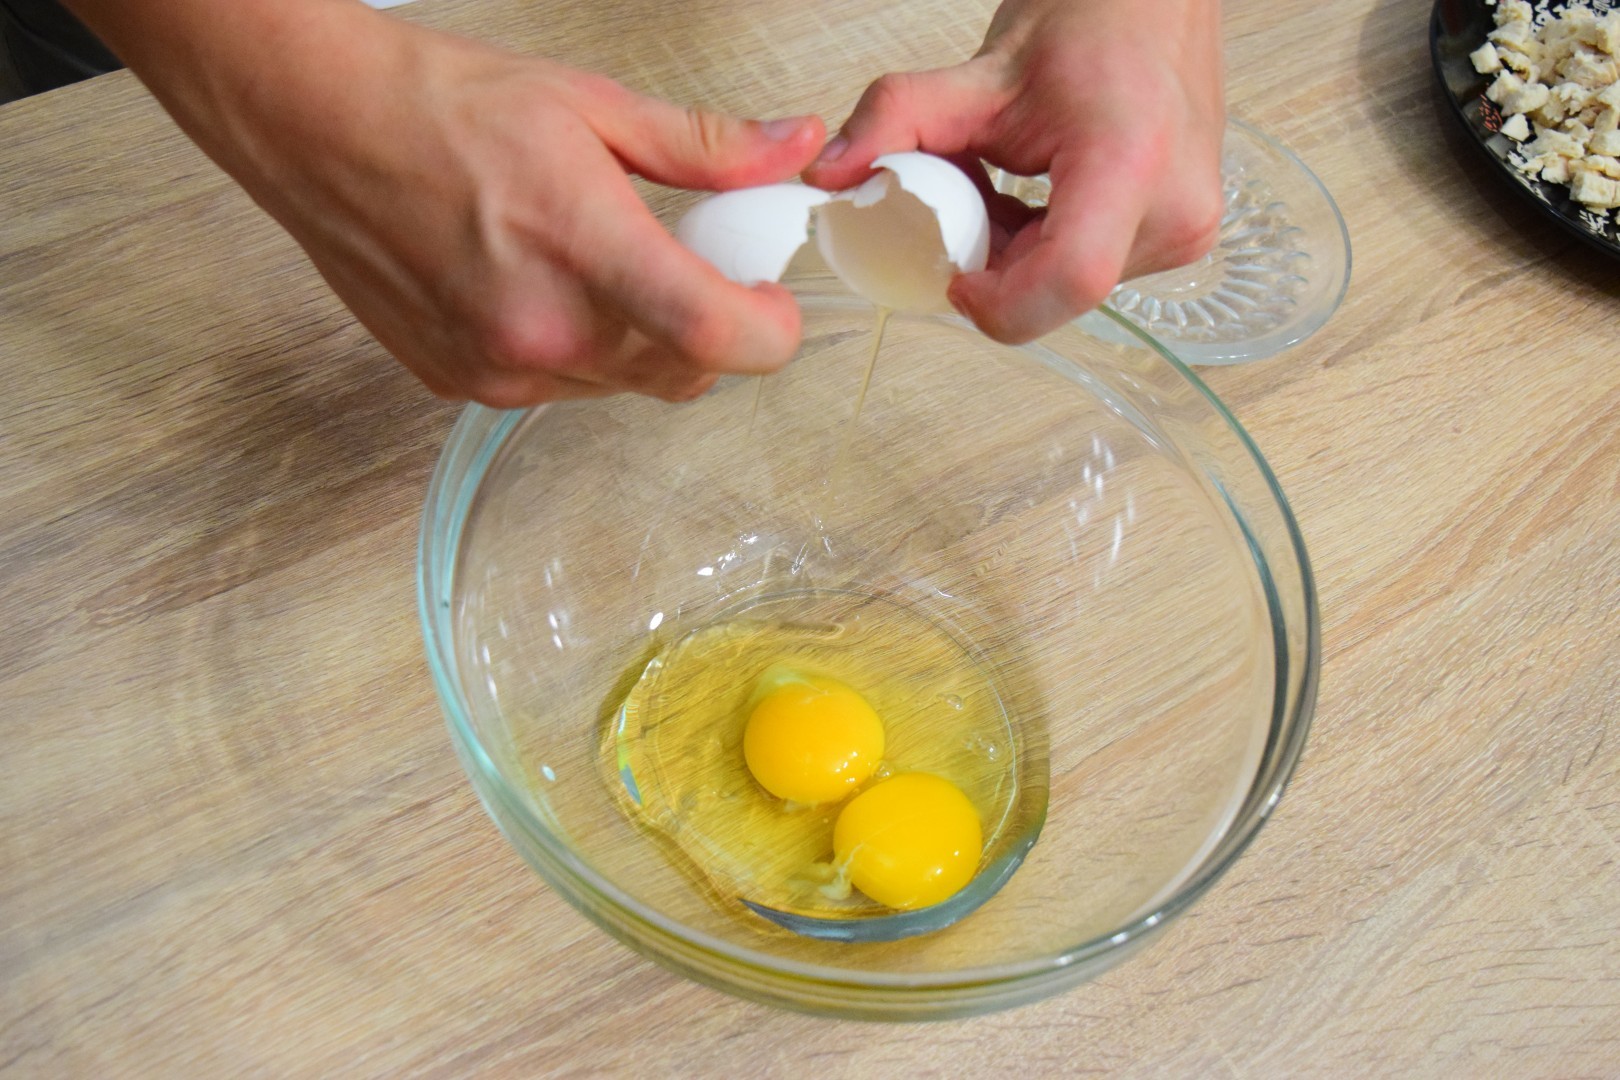 Разбей яйцо 2. Разбить яйца в миску. Разбейте яйца в миску. Яйца разбитые в миске. Разбитые 2 яйца.